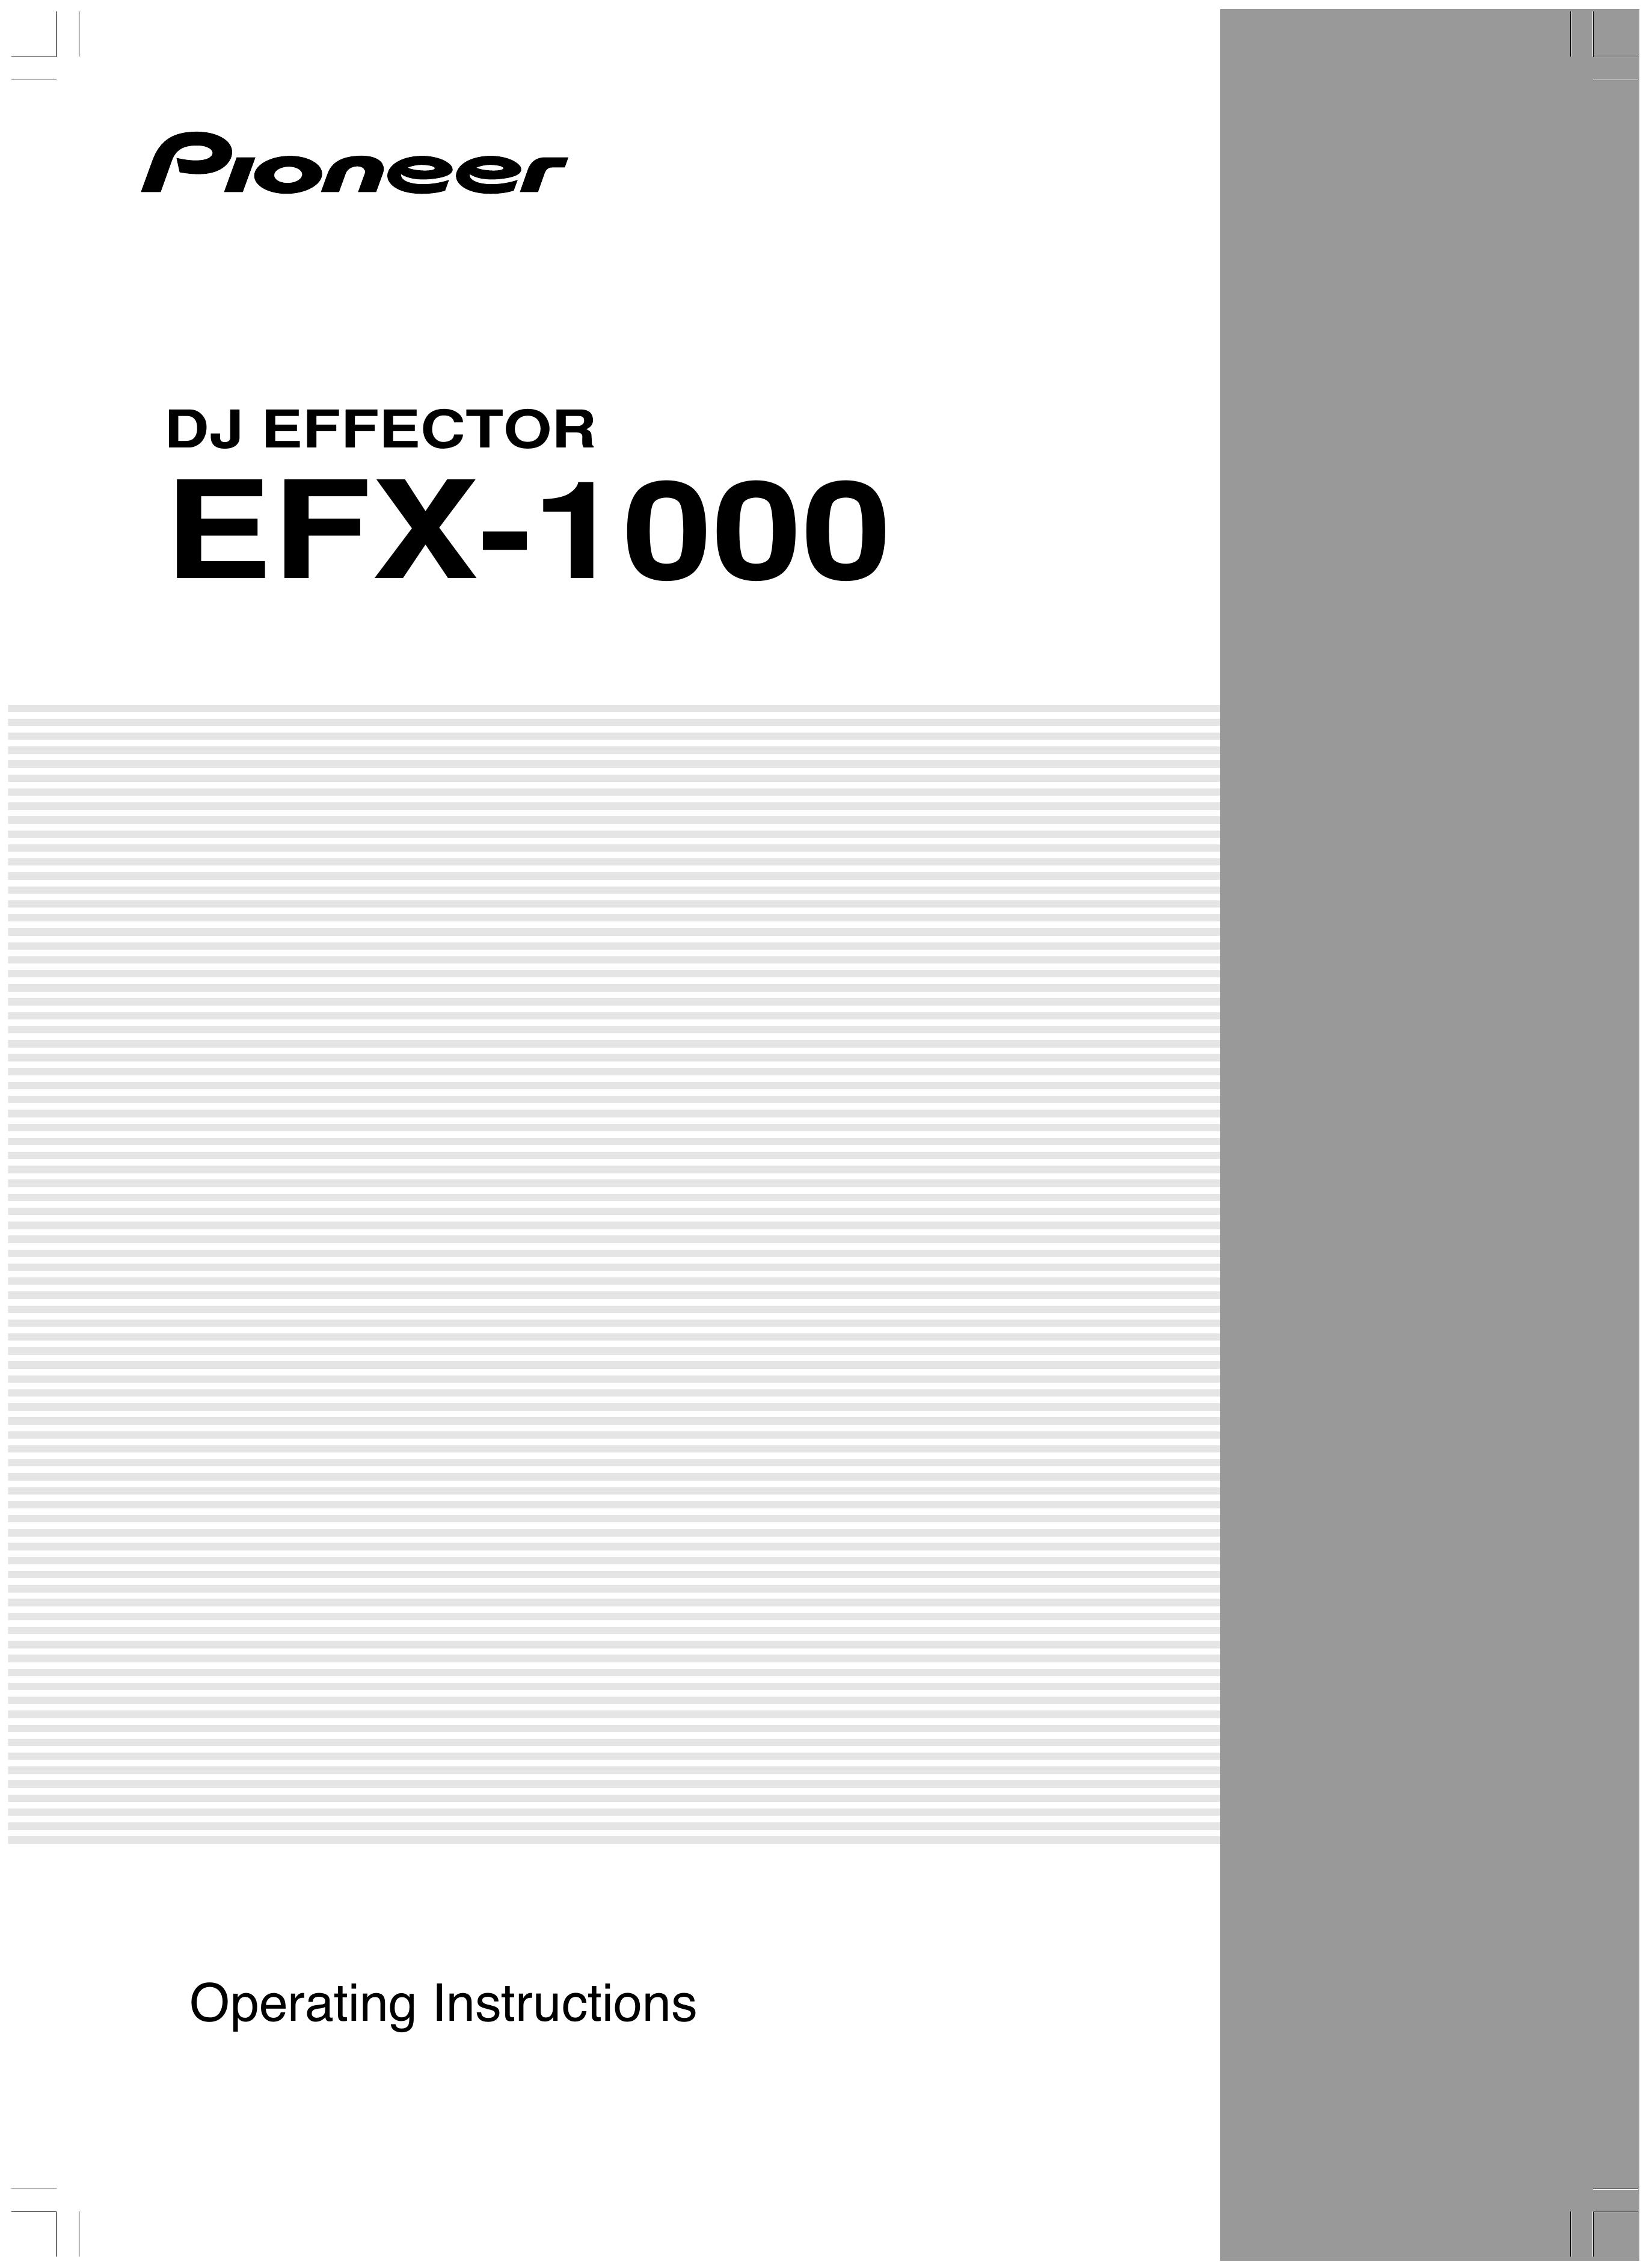 Pioneer DJ Effector DJ Equipment User Manual